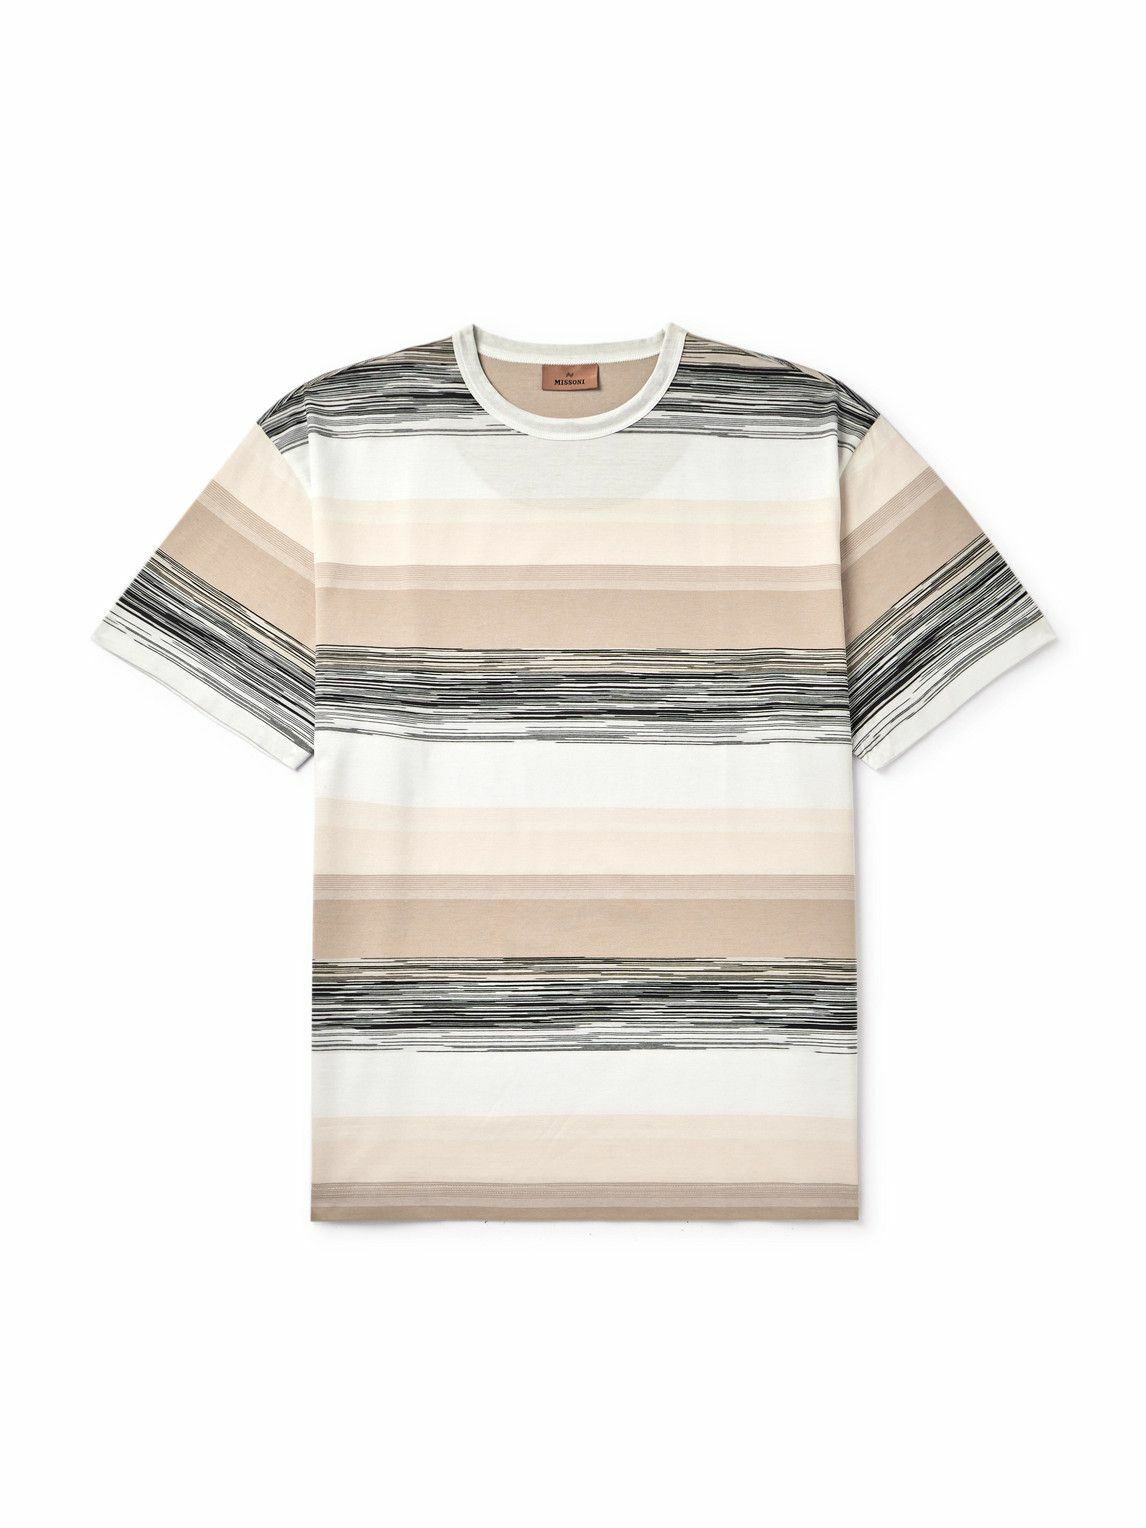 Missoni - Space-Dyed Cotton-Jersey T-Shirt - Neutrals Missoni